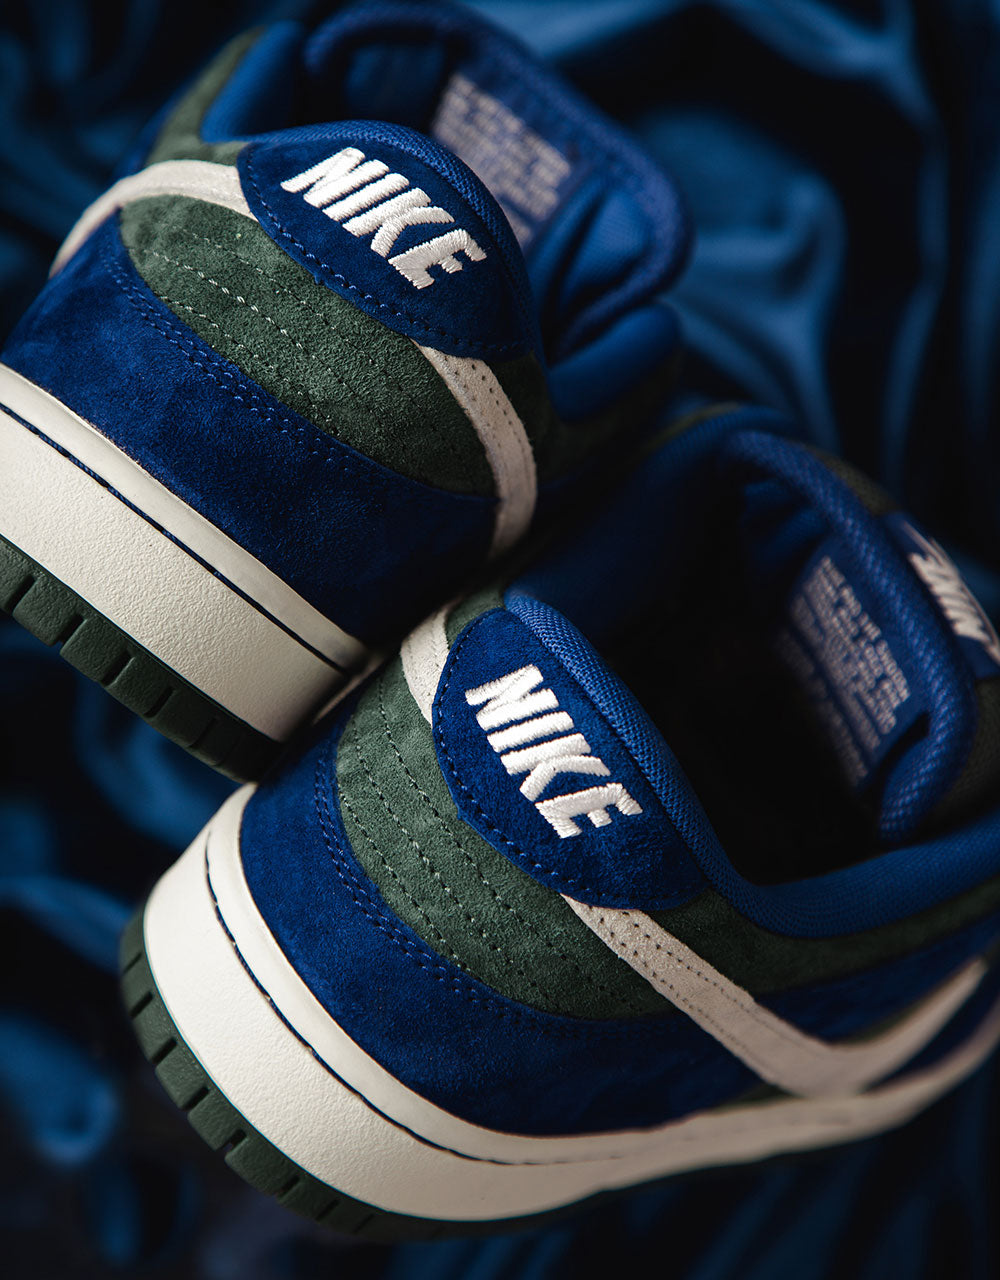 Nike SB 'Wildcard' Dunk Low Pro Skate Shoes - Dark Green/Blue/White